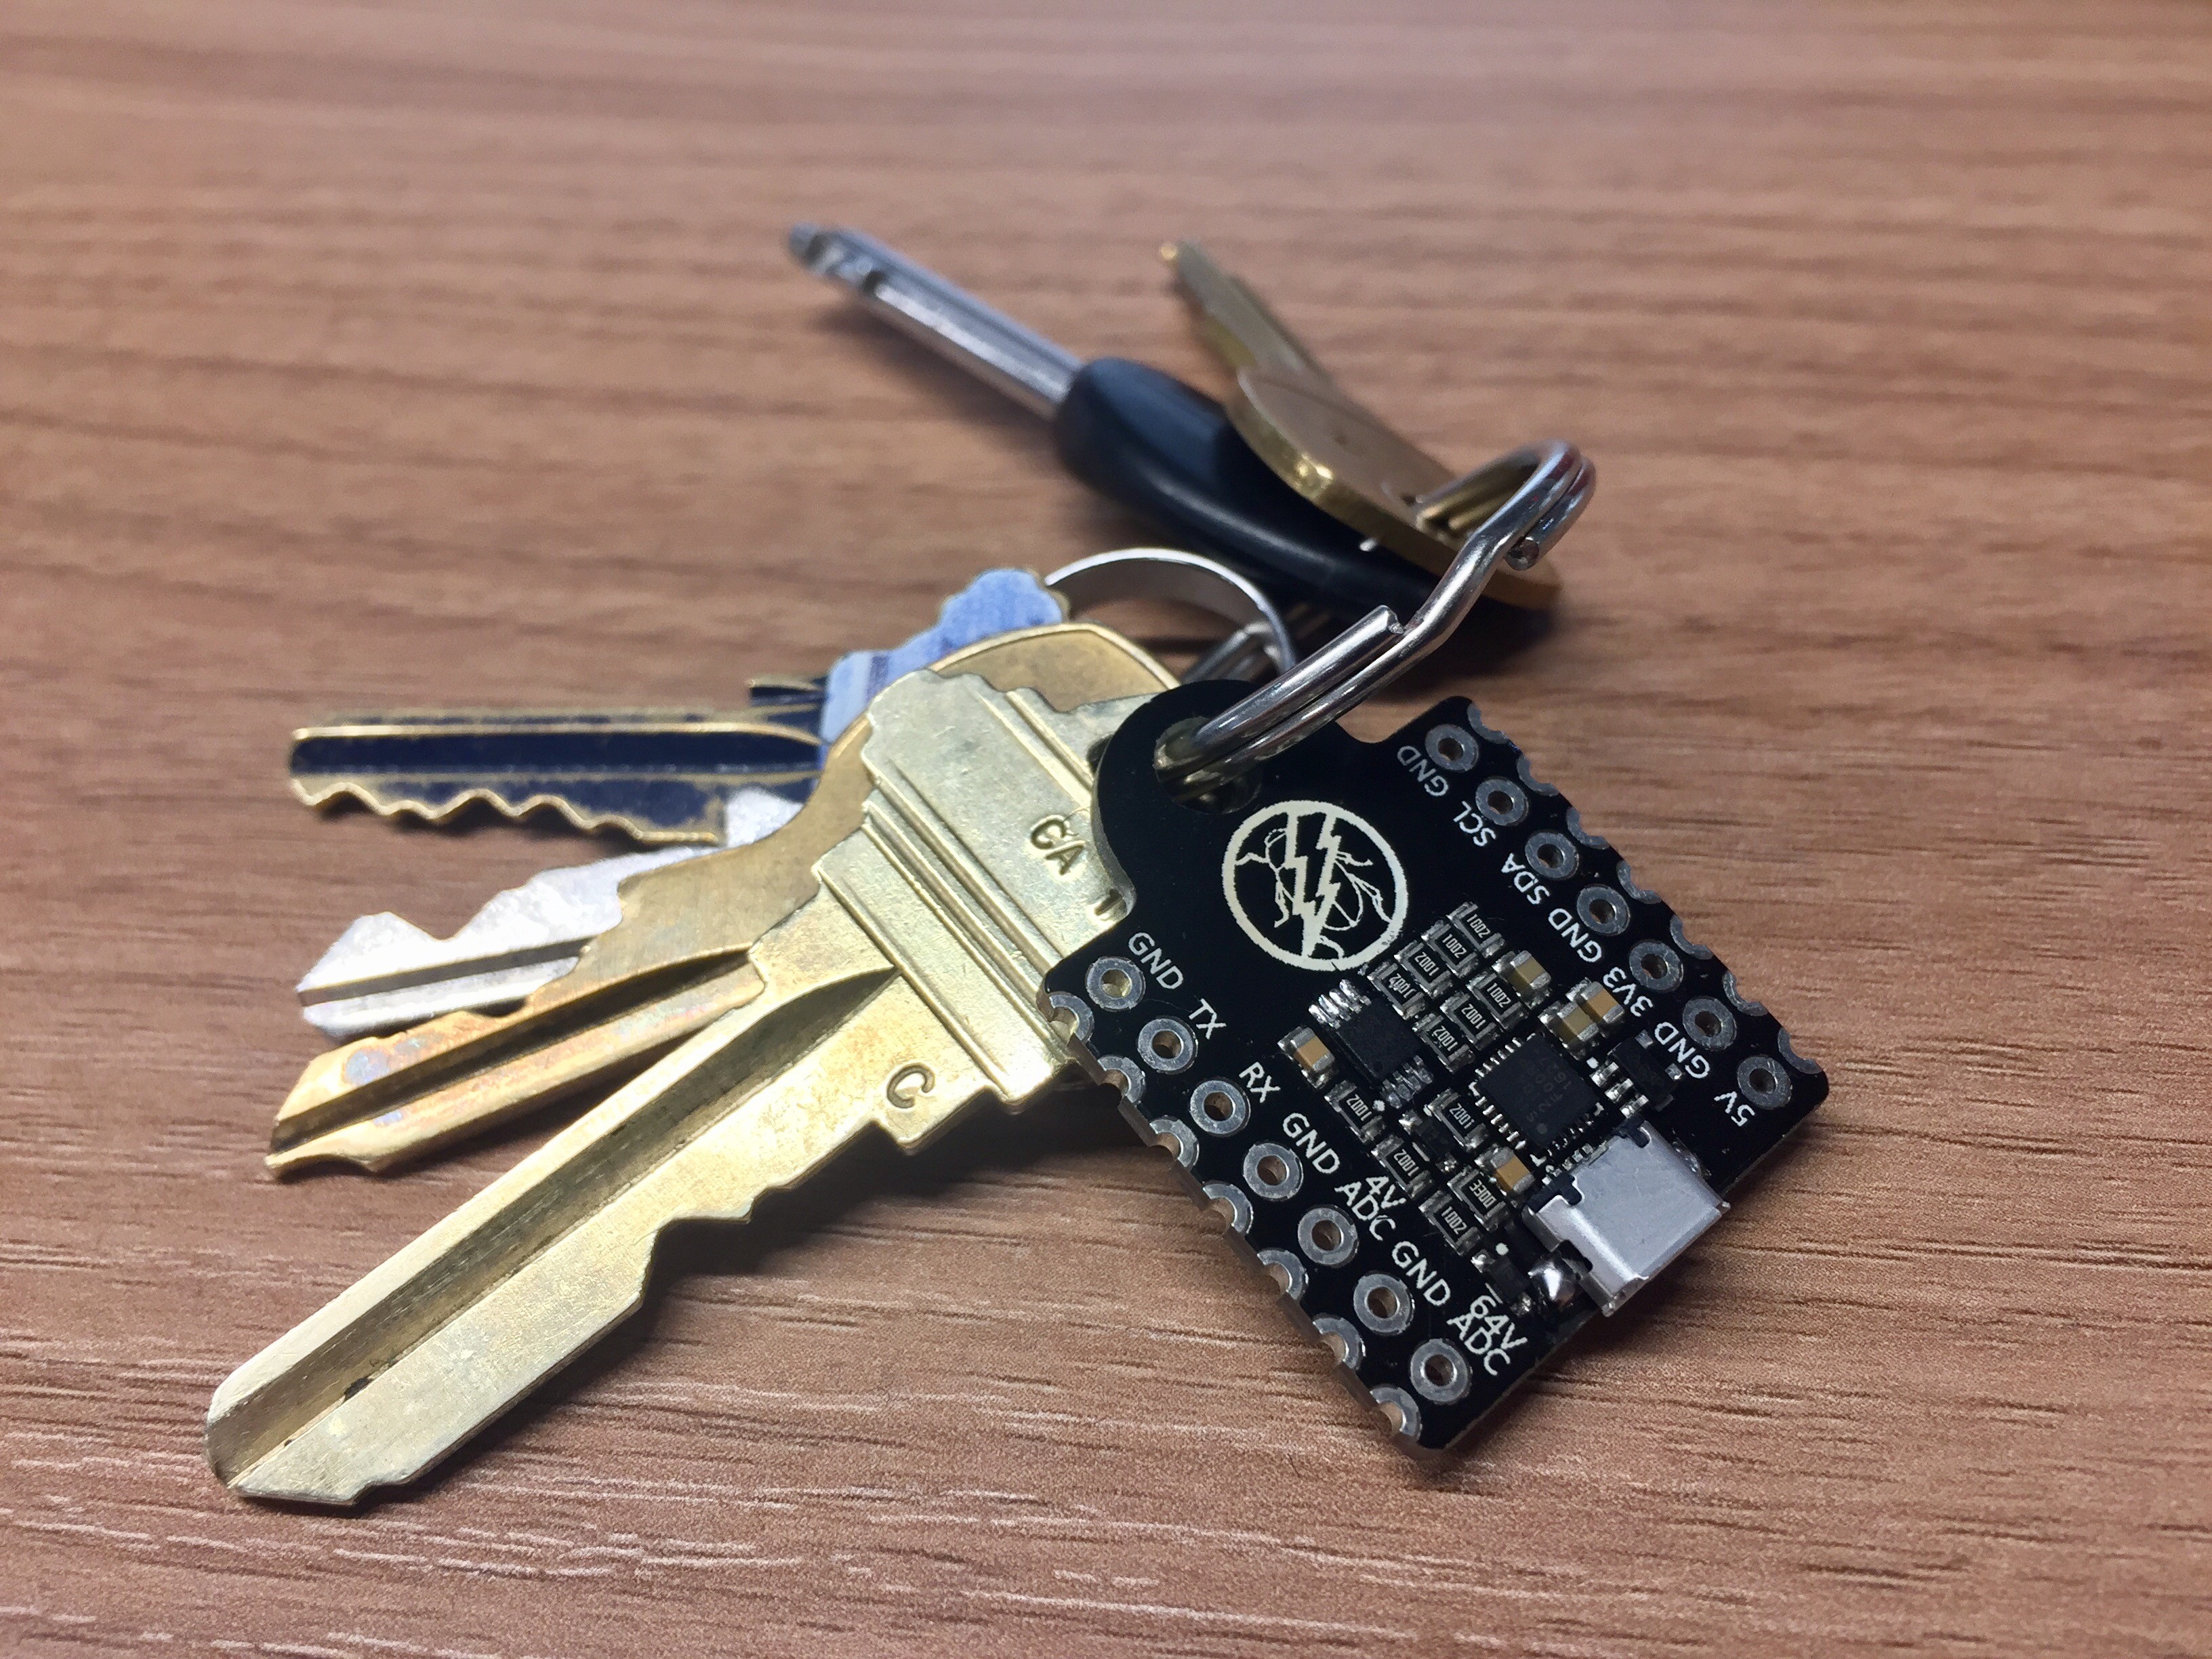 GitHub - S-March/dEEbugger_Public: The dEEbugger is an ESP8266 based keychain swiss army knife for electronics